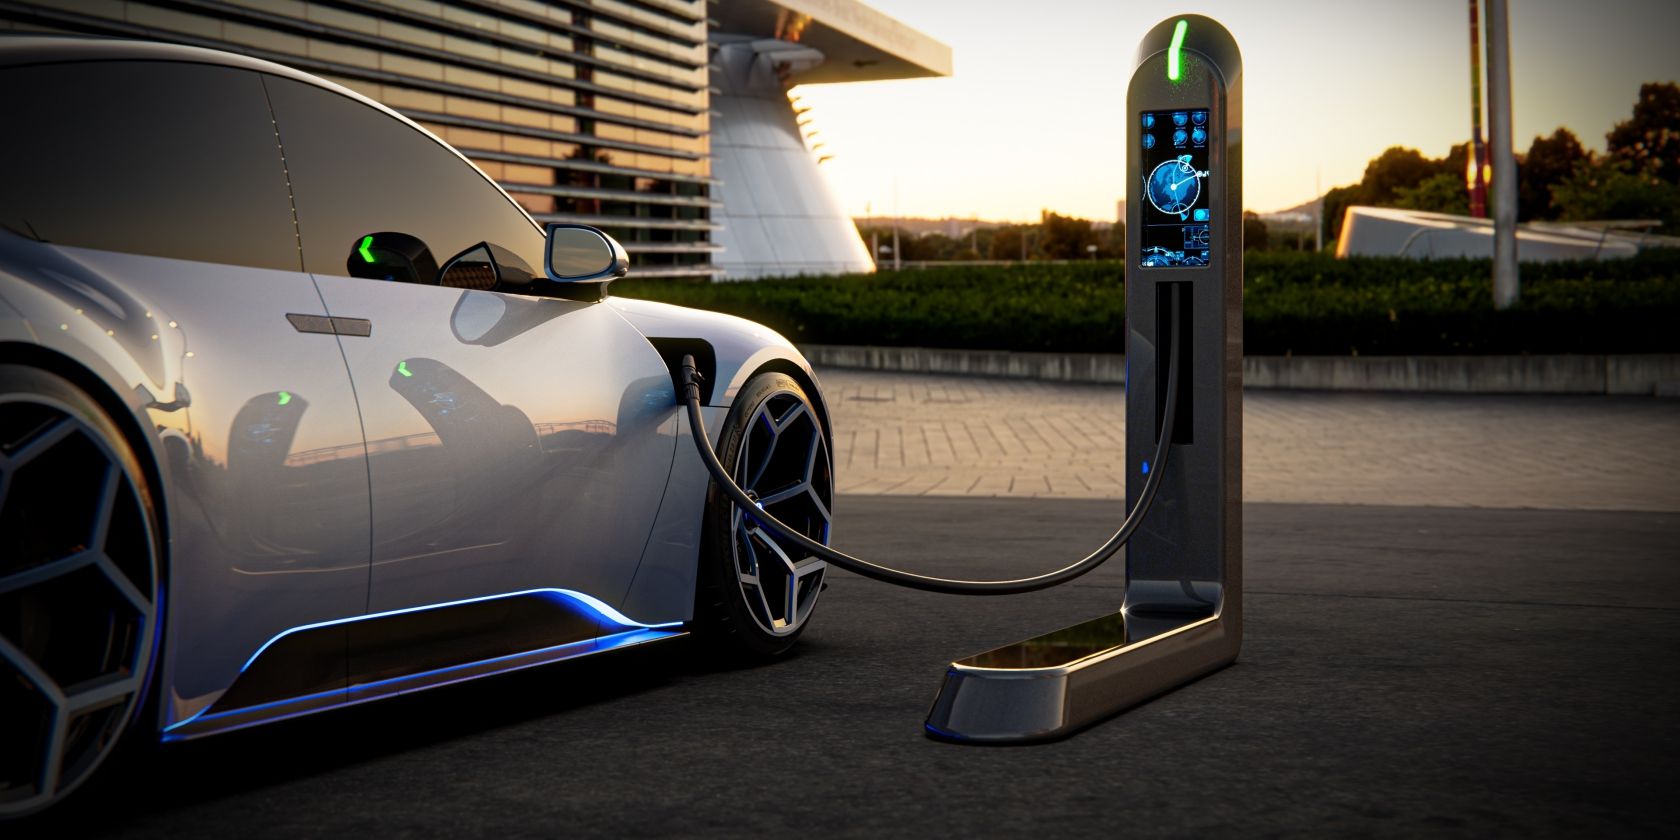 Silver EV sports car charging outdoors at night